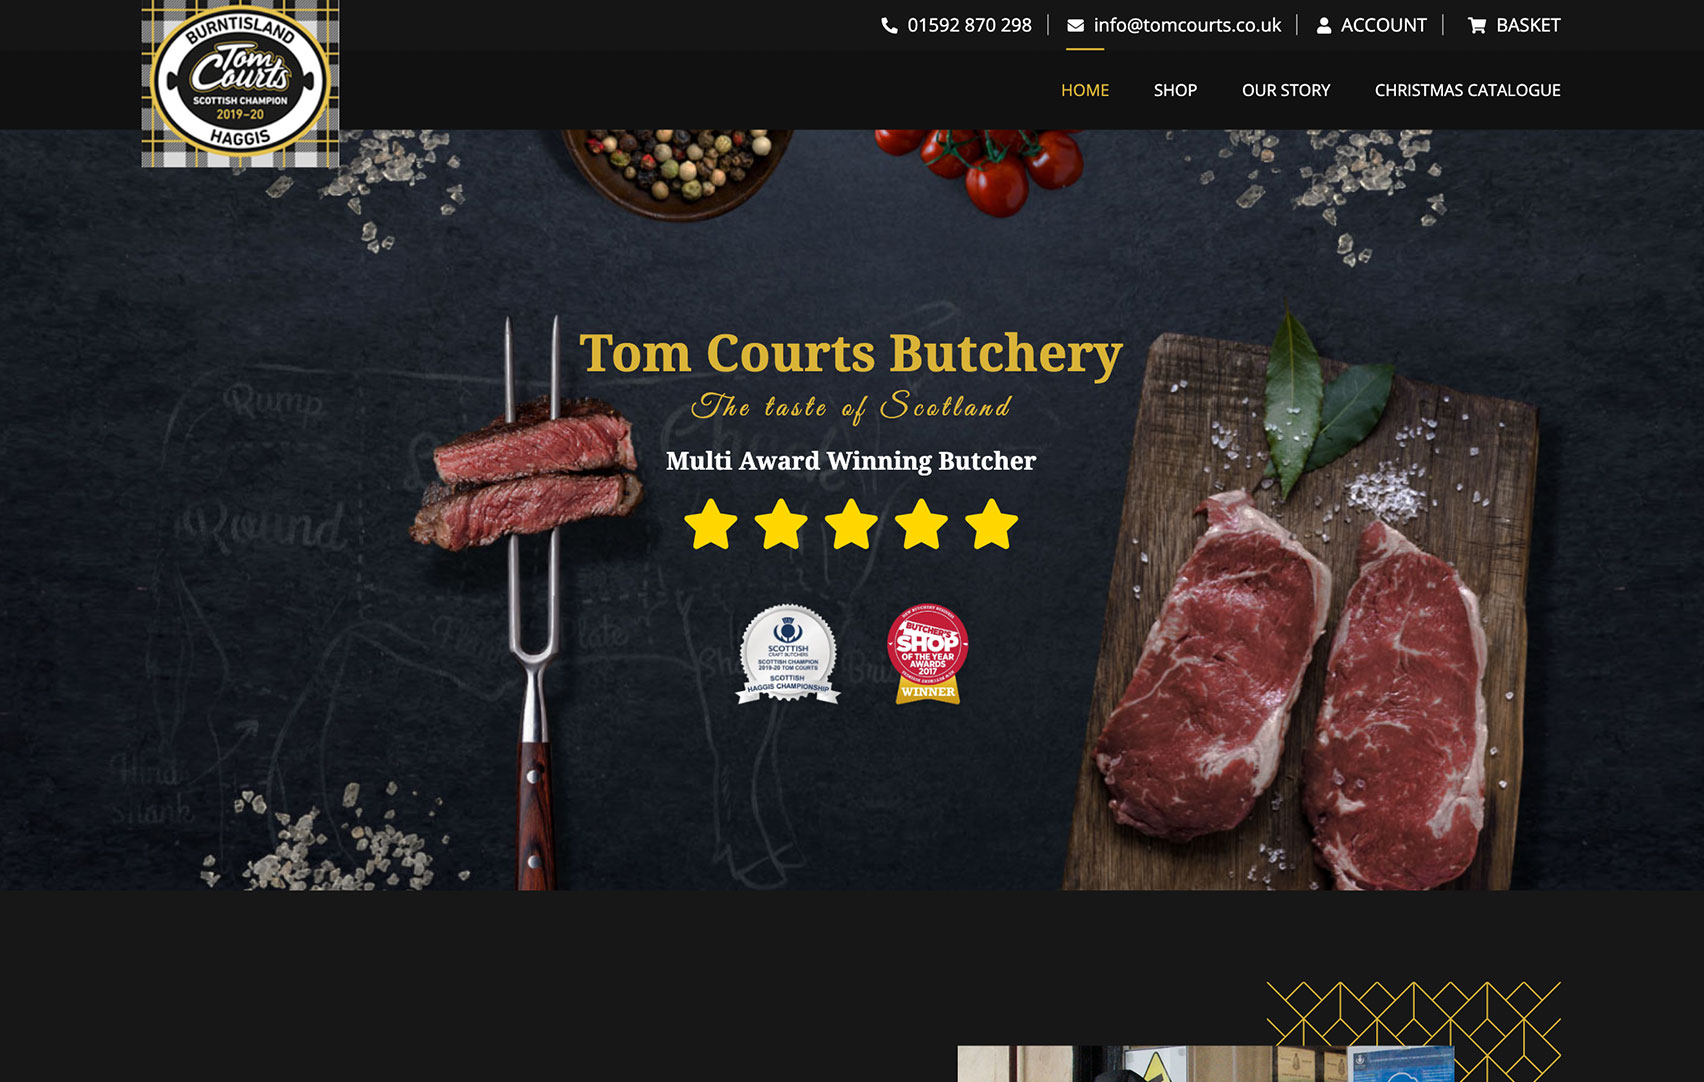 Tom Courts Butchery website design display image for website development